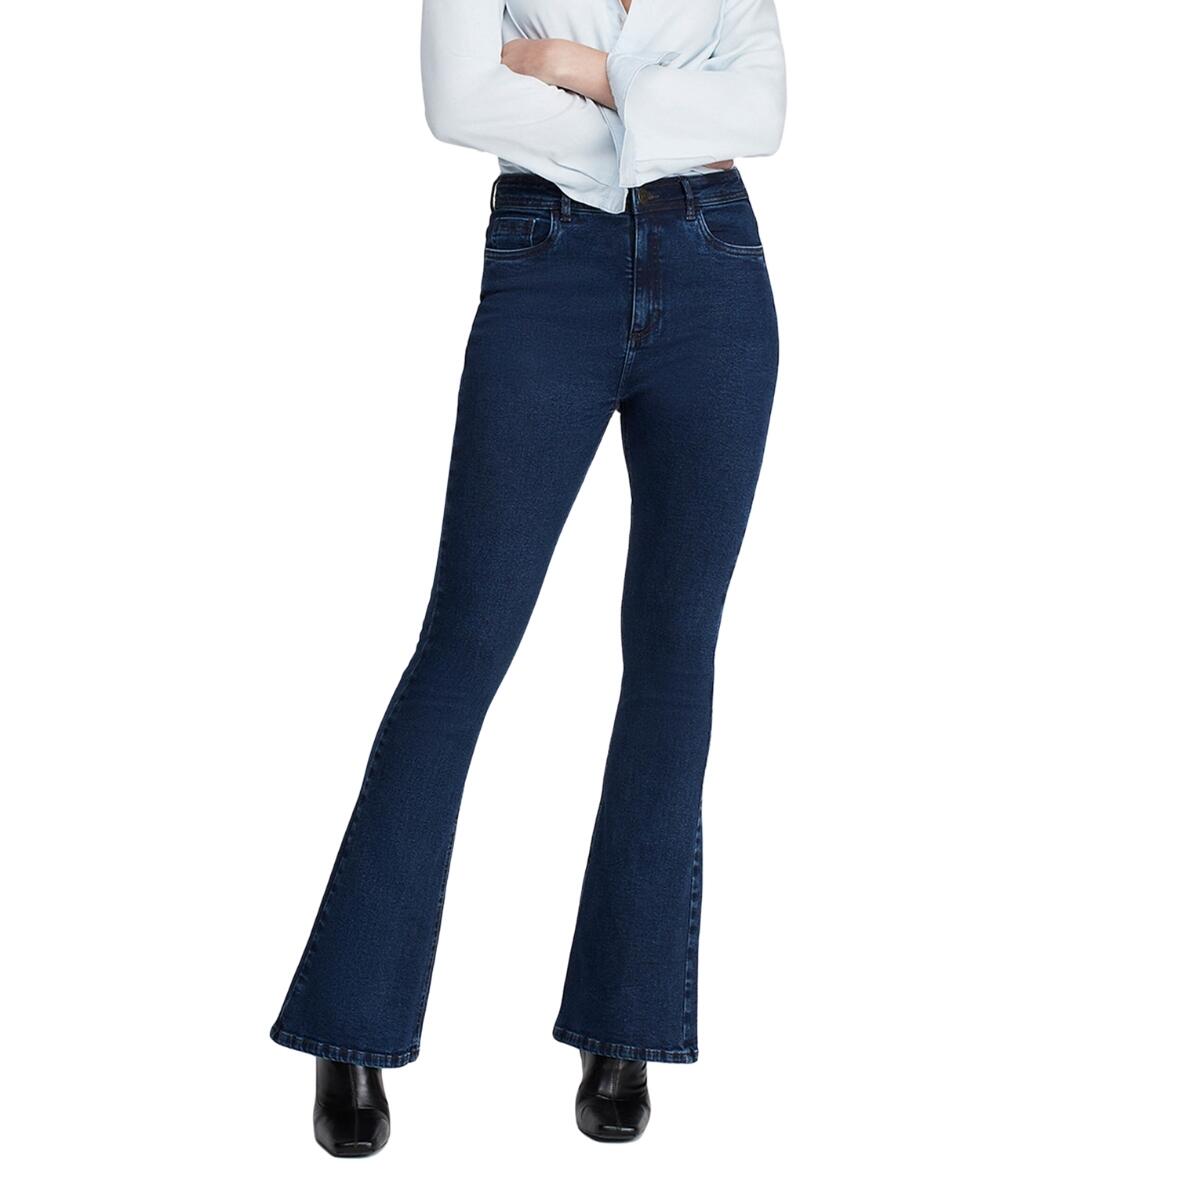 Comprar Calça Jeans Flare Slim Cintura Alta Dzarm - R$339,99